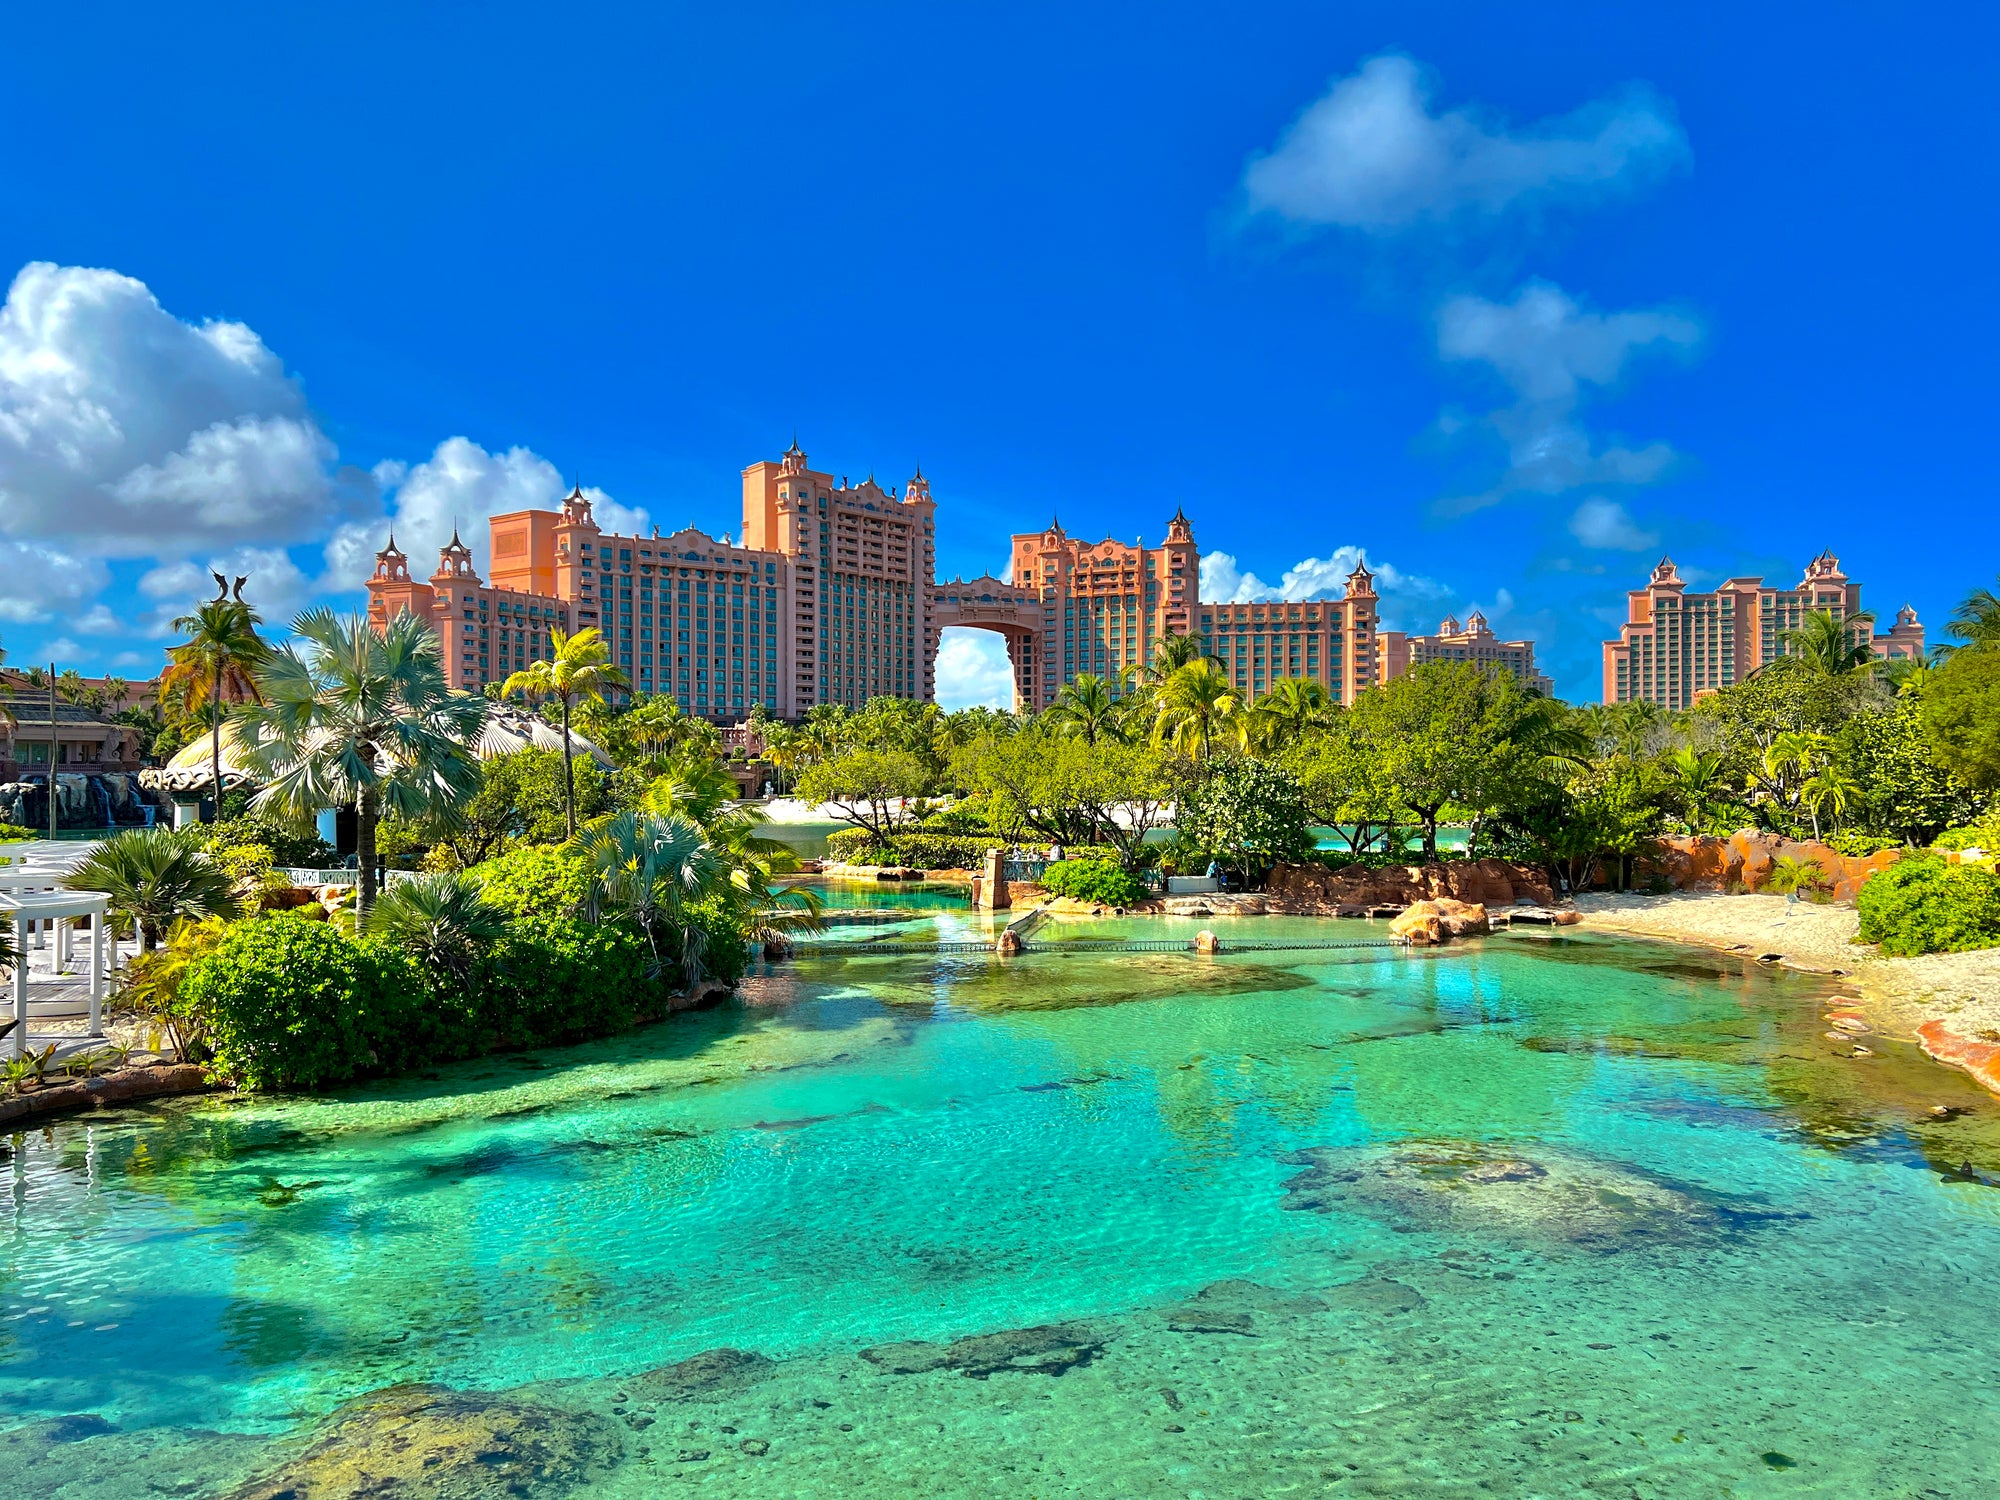 The scenic view of Atlantis hotel in Paradise Island near Nassau, Bahamas